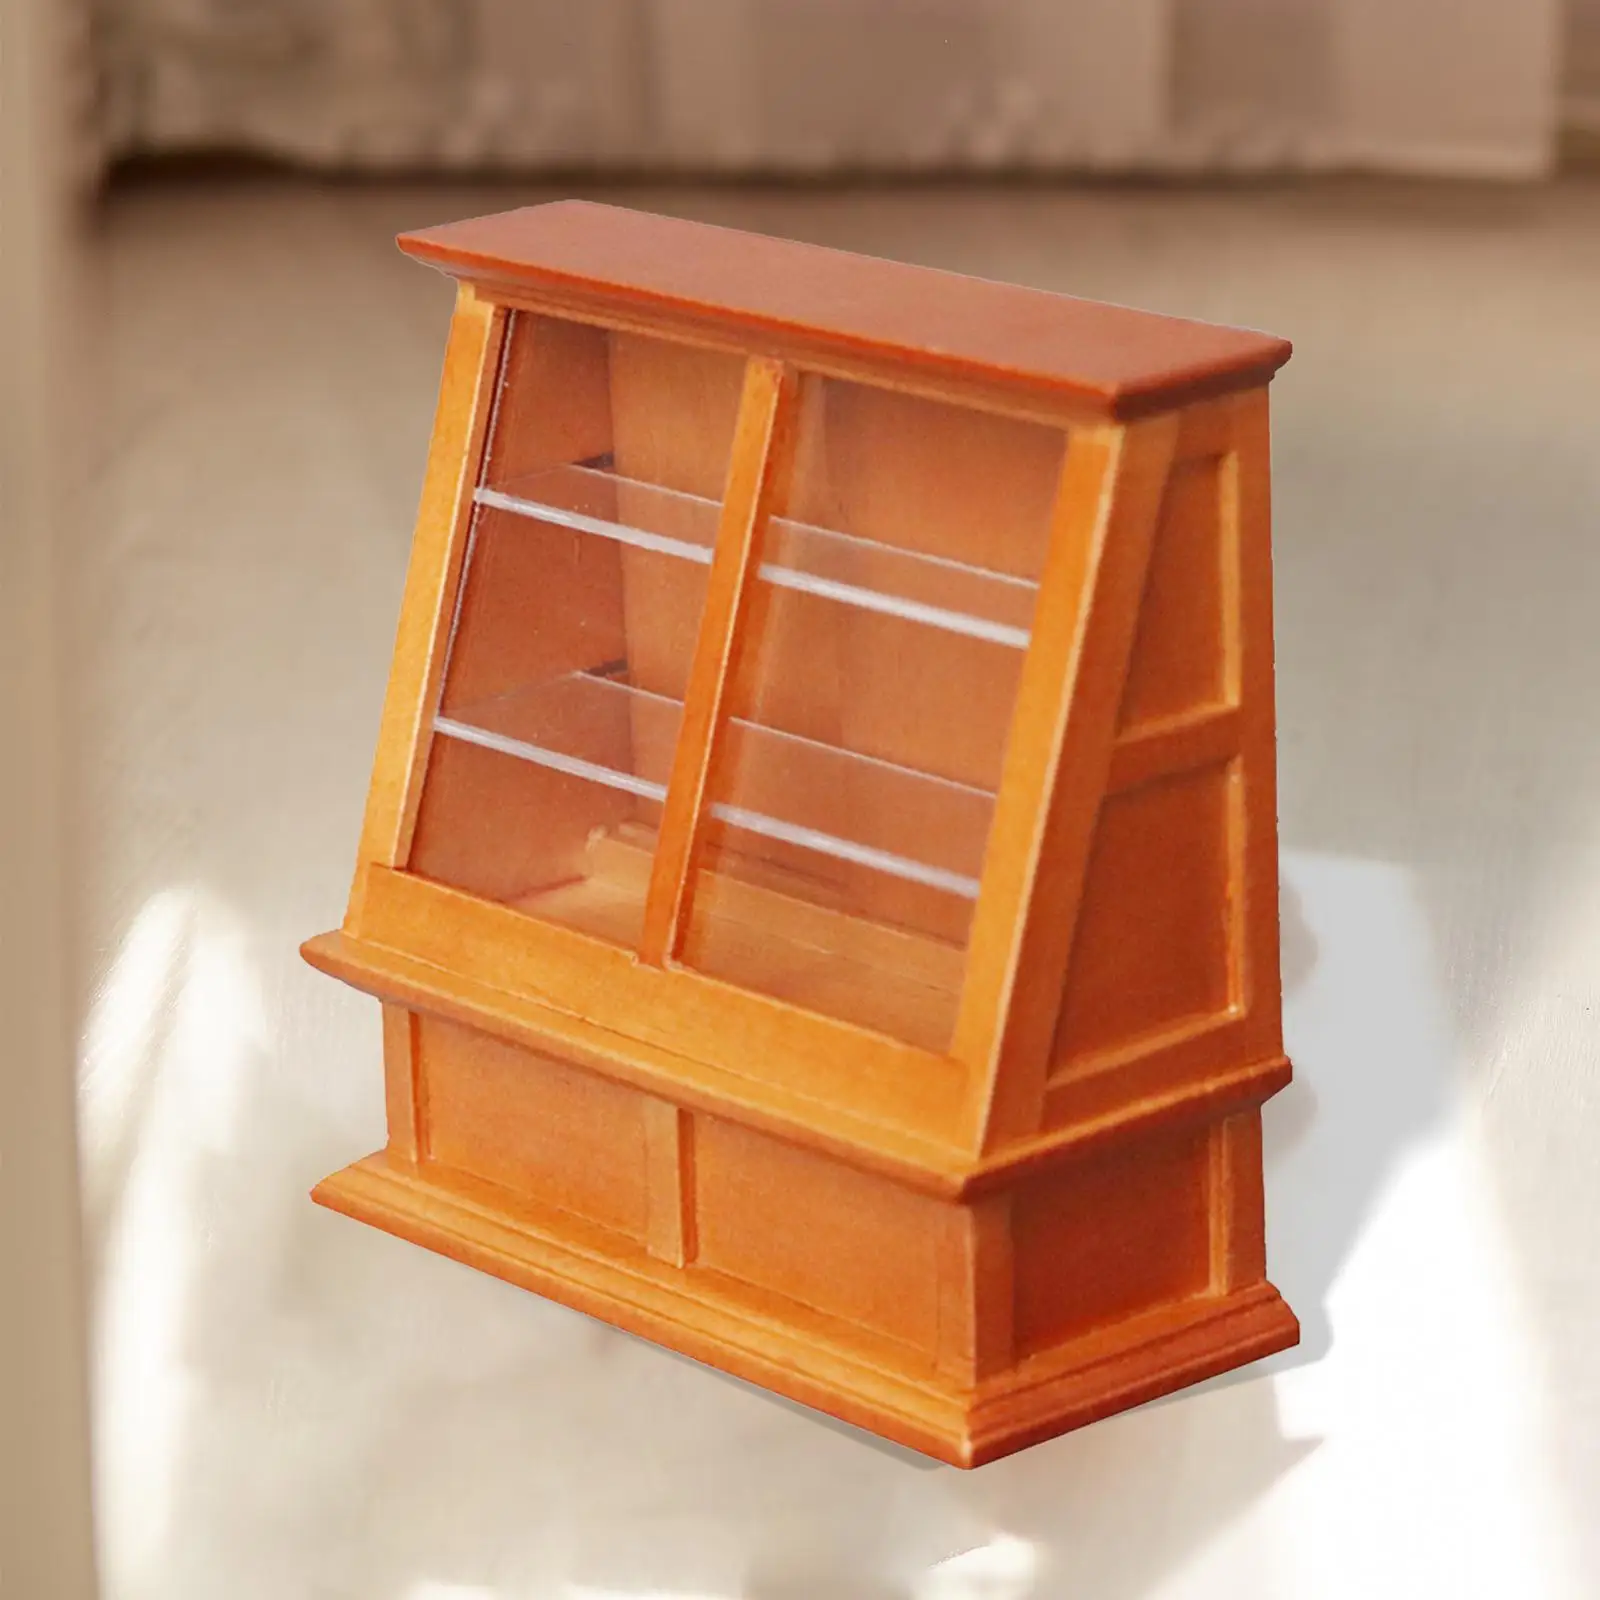 Miniature Cake Cabinet Shelf for 1:12 Scale Dollhouse Decoration Accessories